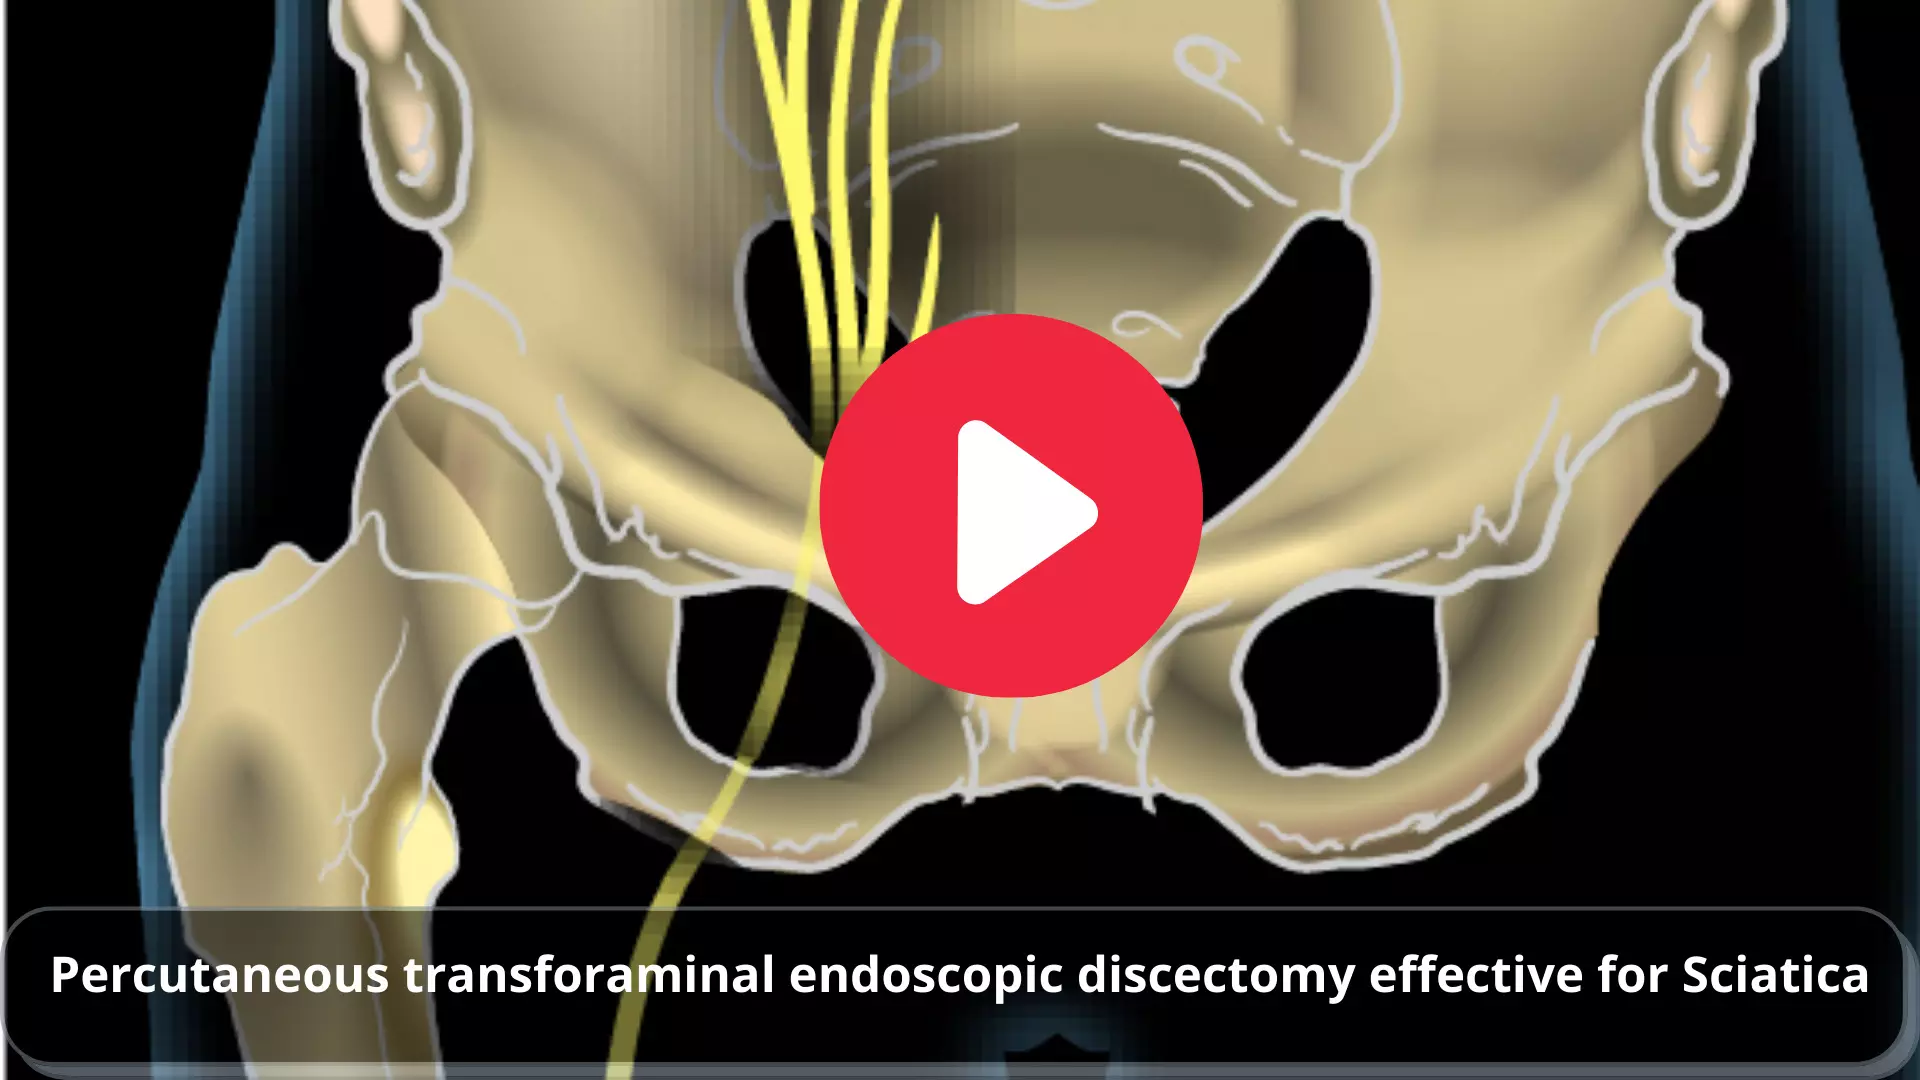 Percutaneous transforaminal endoscopic discectomy effective for Sciatica